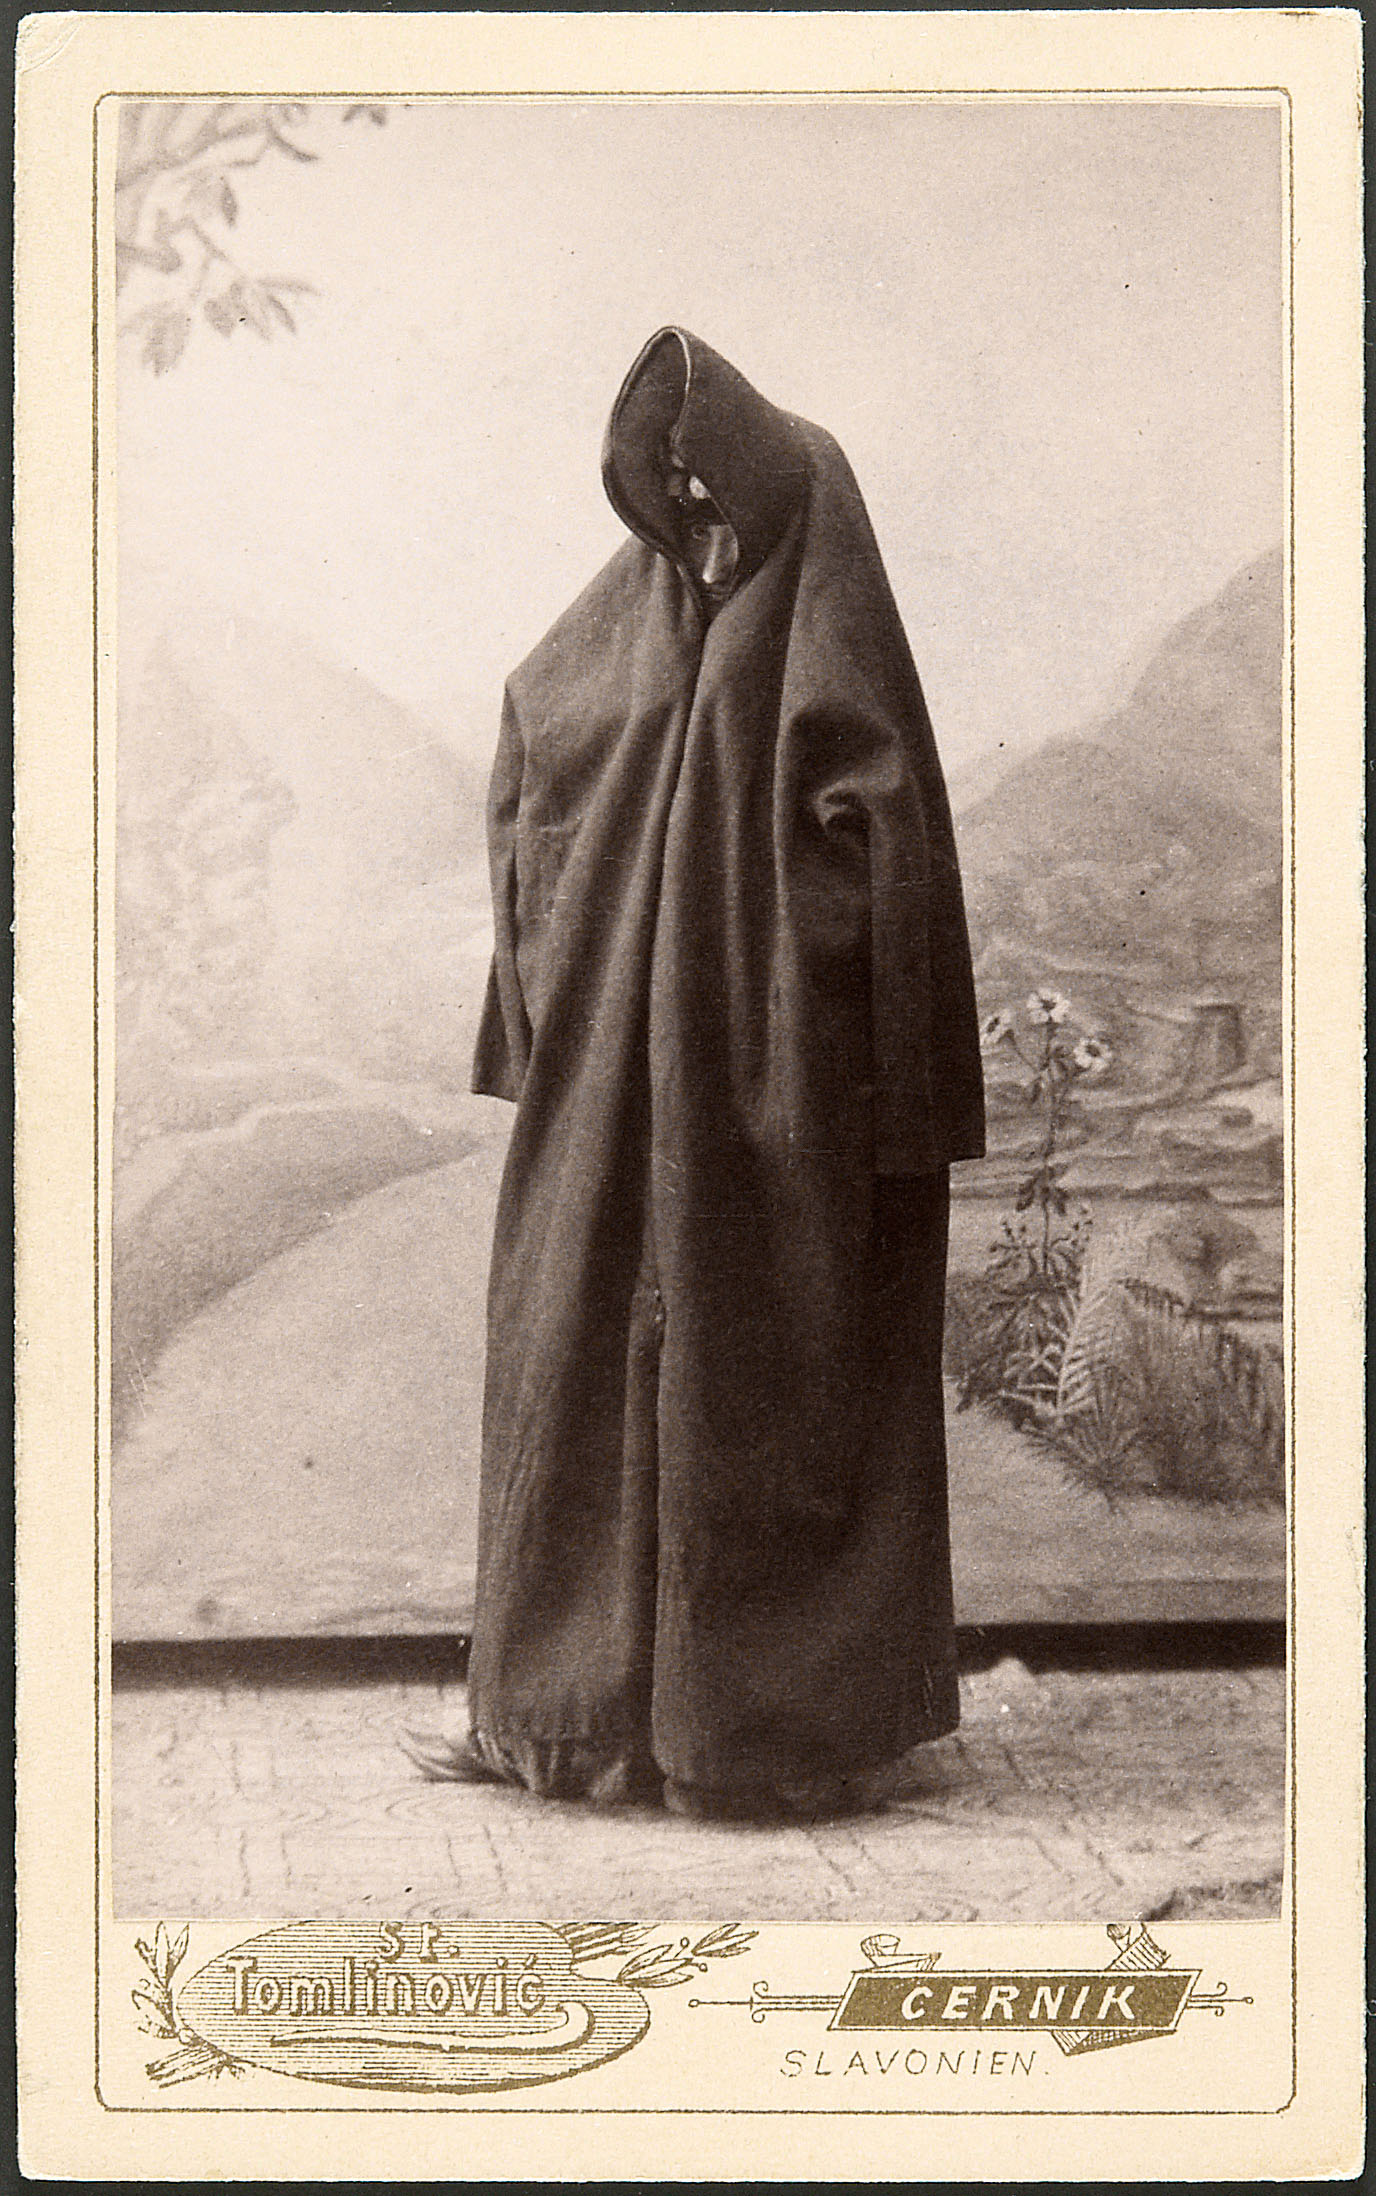 Türkin, Muslim woman from Mostar, Stjepan Tomlinovic, Bosnia-Herzegovina, around 1900.